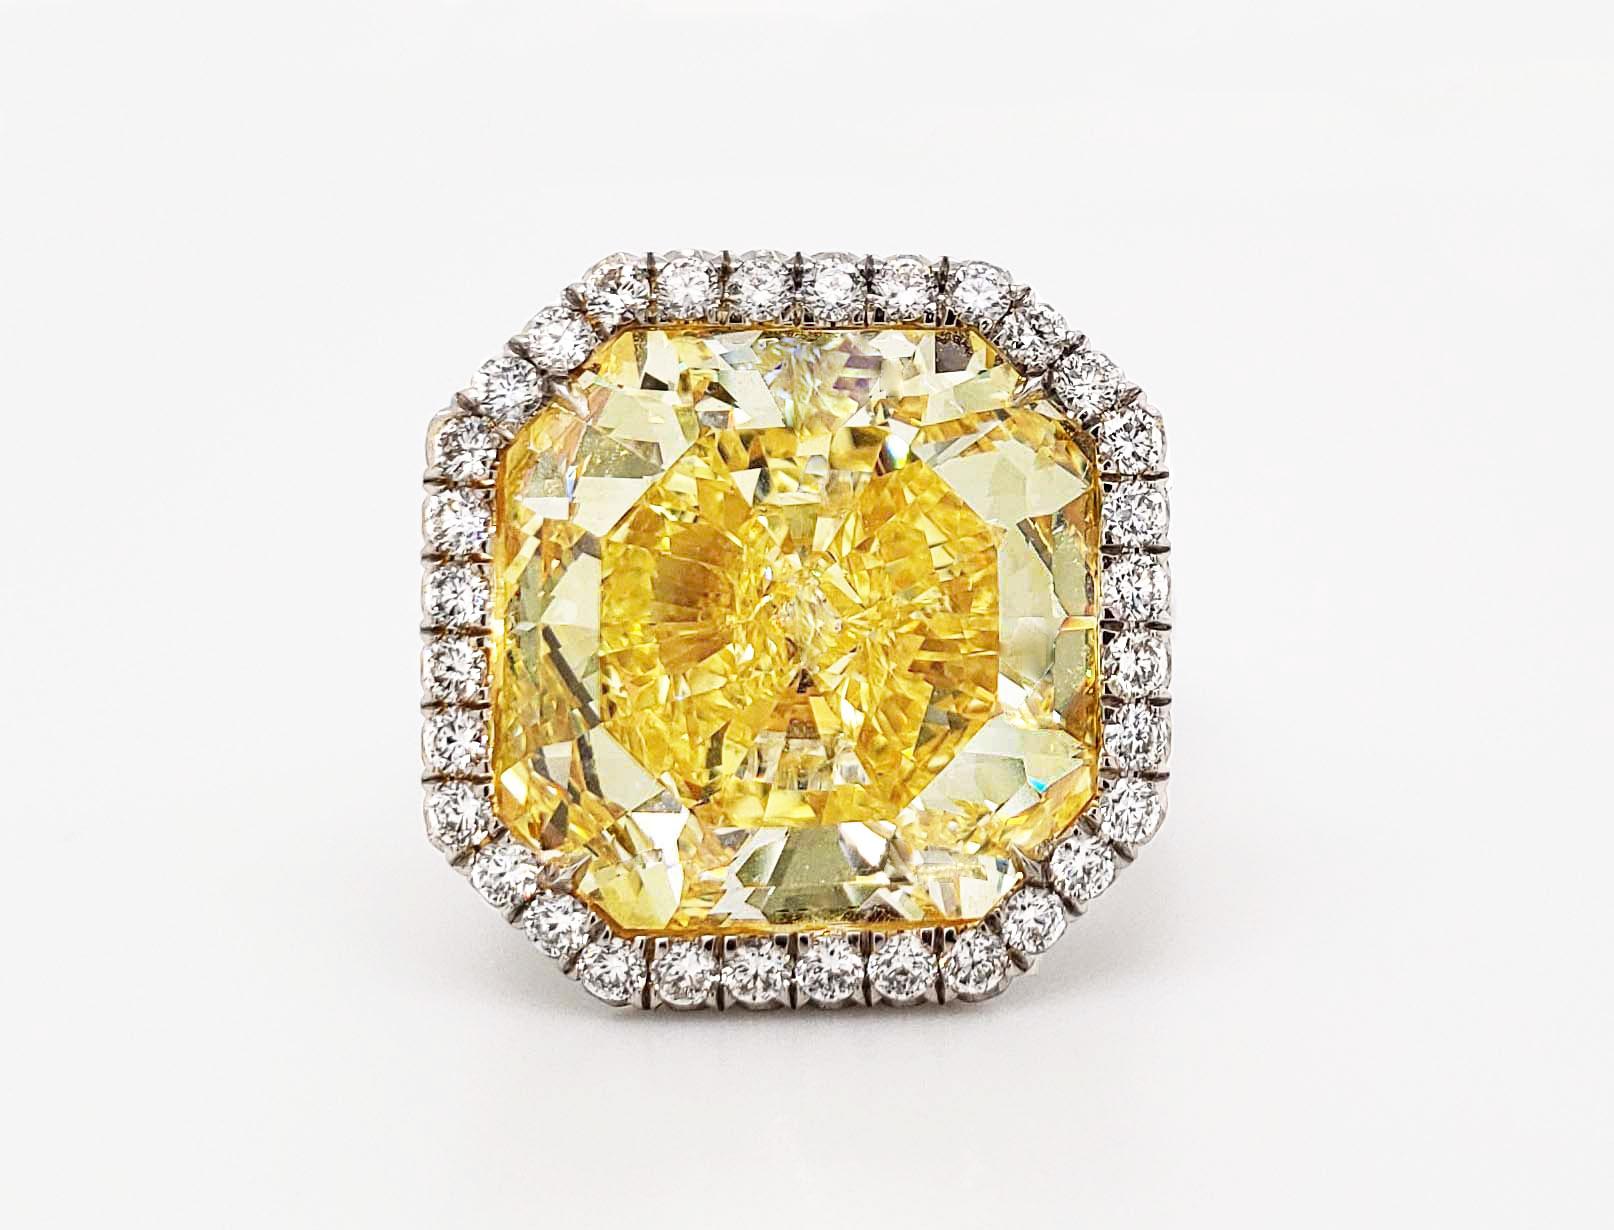 15 carat yellow diamond ring